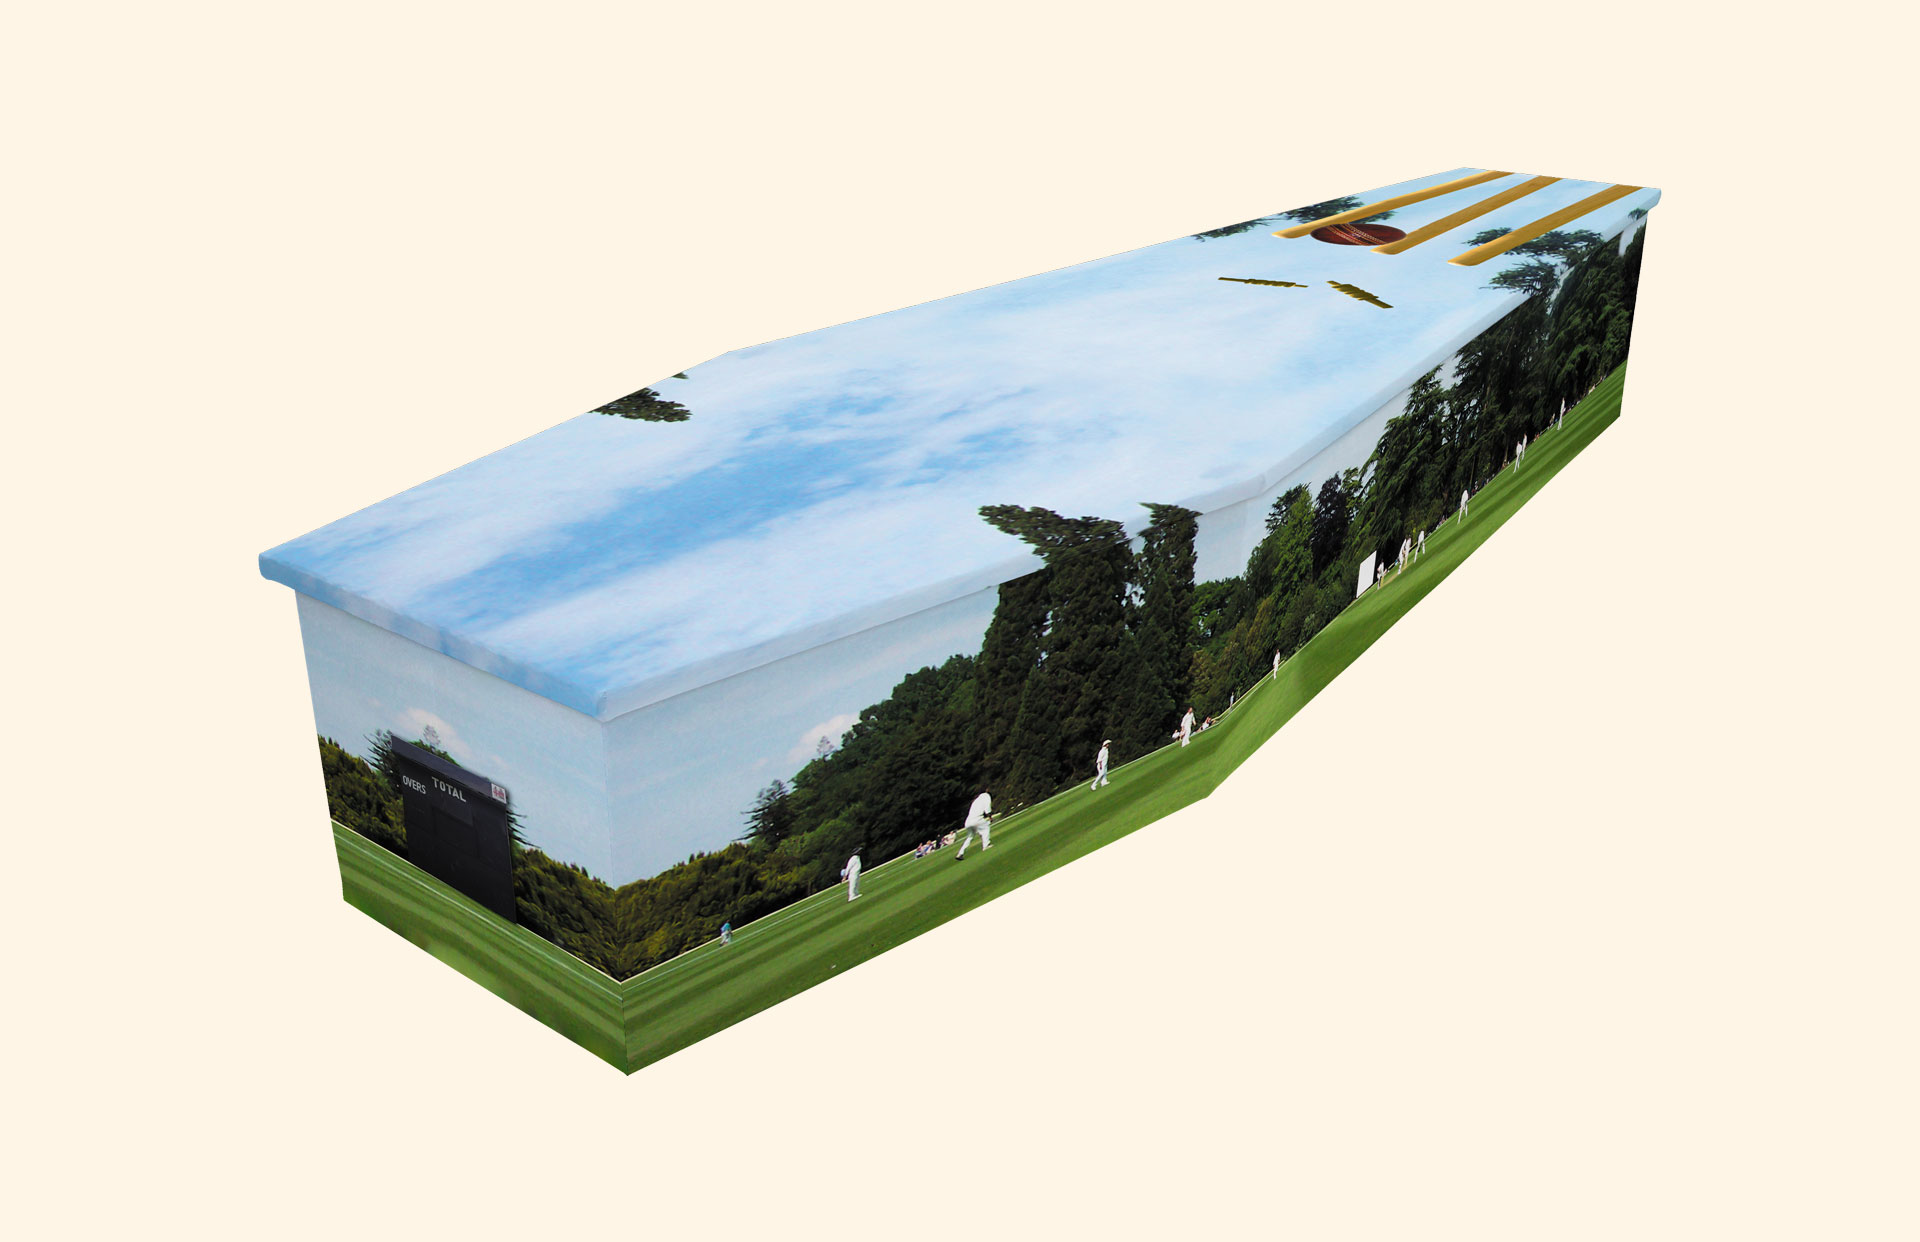 Cricket design on a cardboard coffin